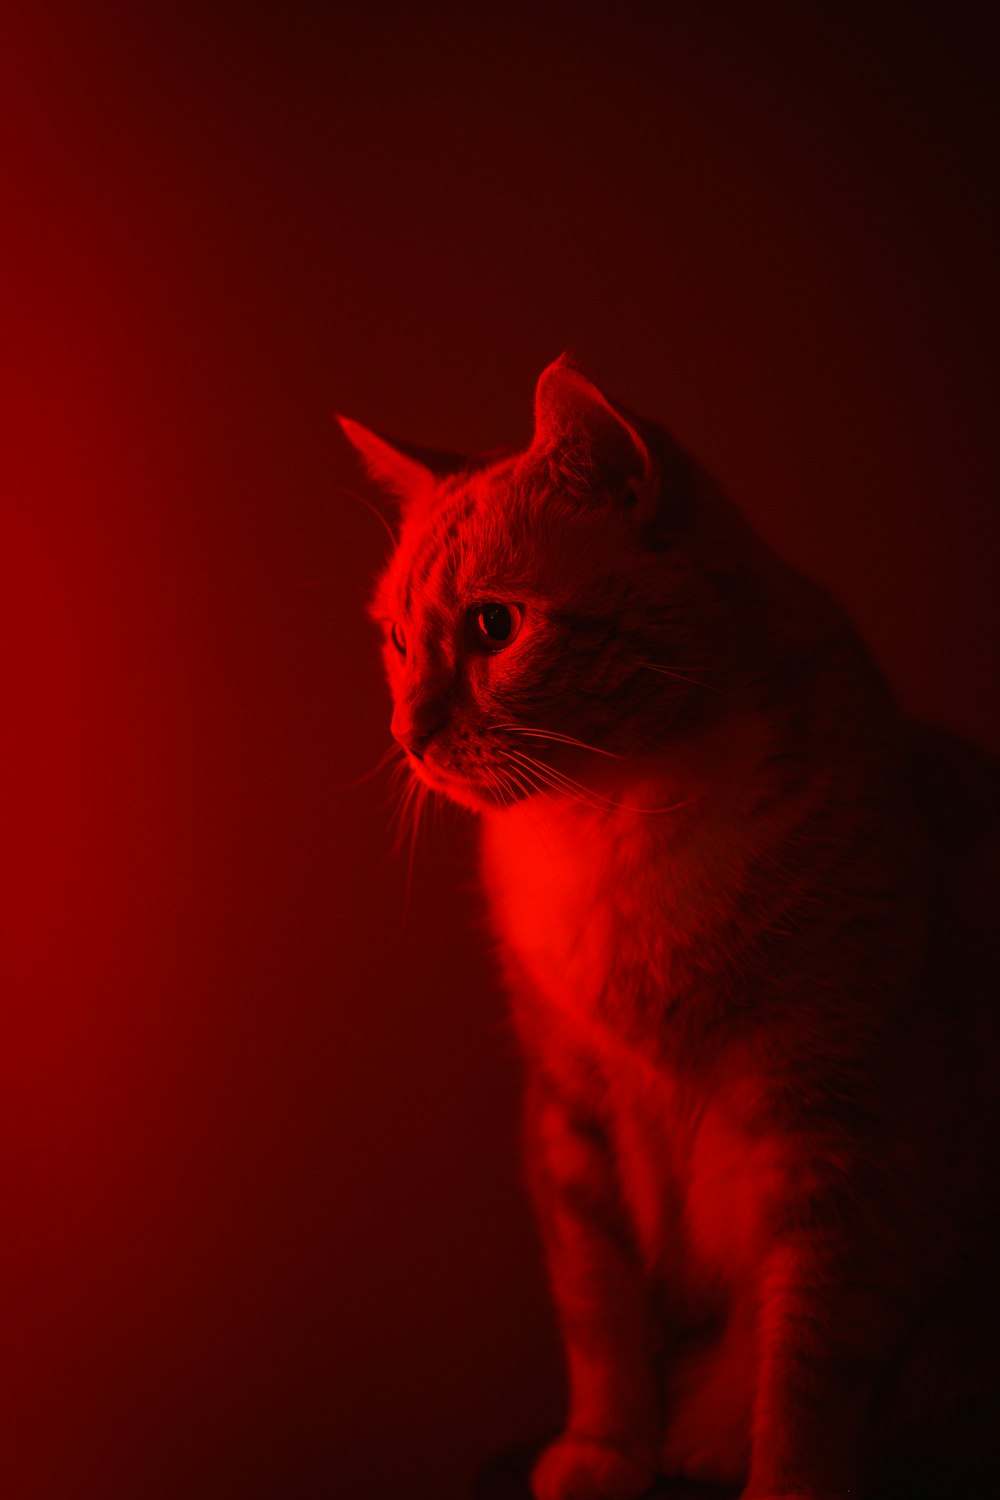 Red cat red get. Red Cat. Red Cat обои на телефон. Красно белая кошка. Red Cat apeirophobia.